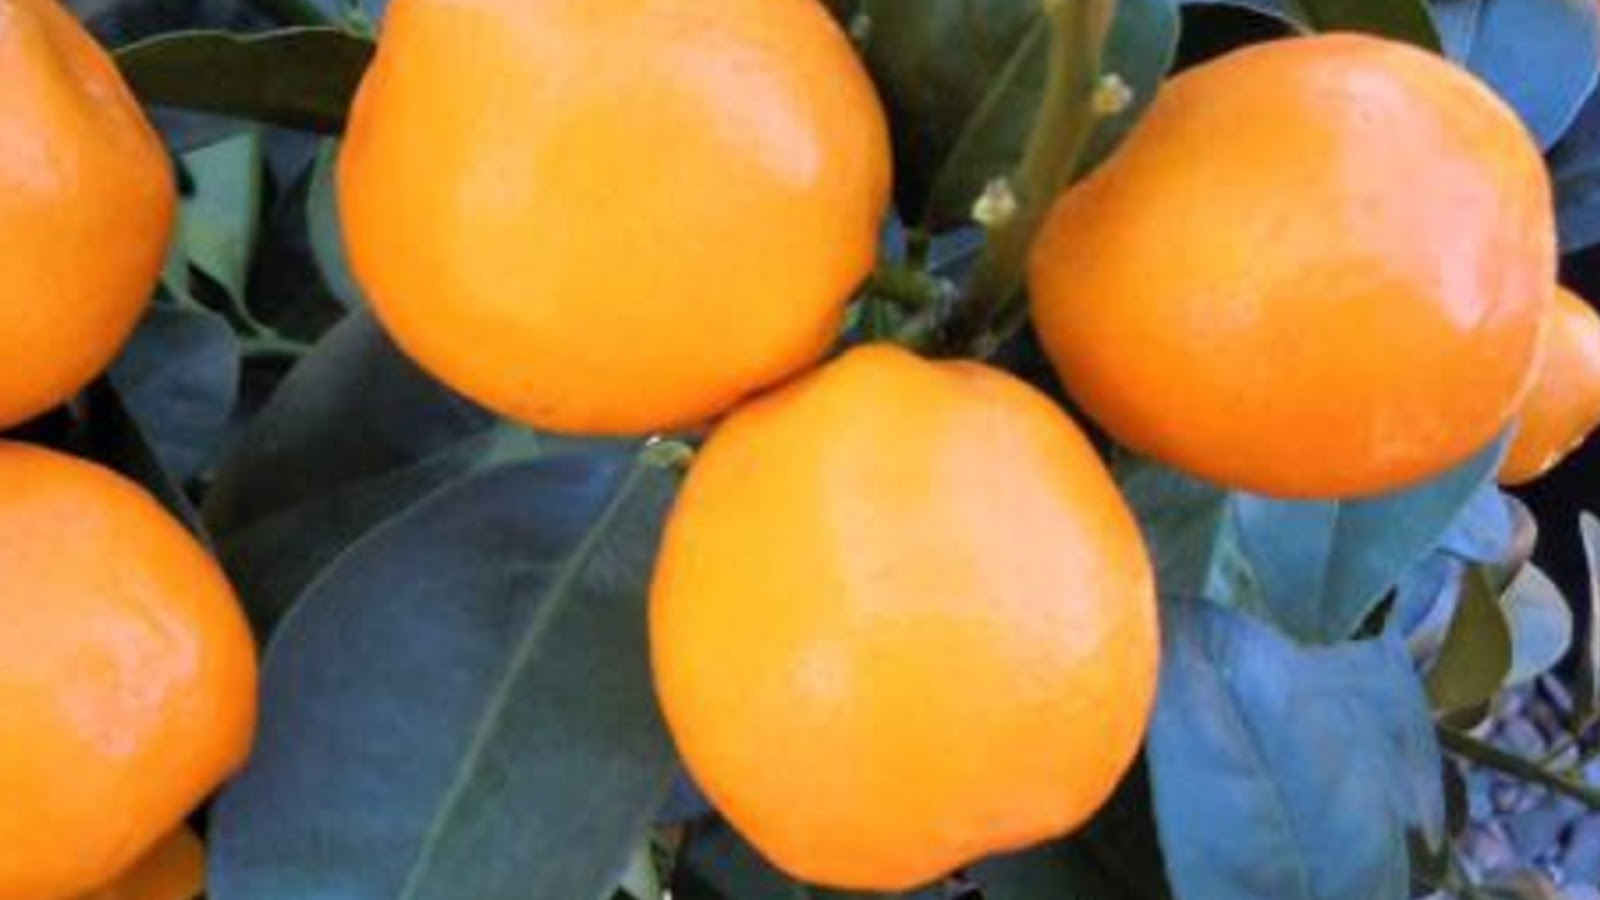 types of kumquats